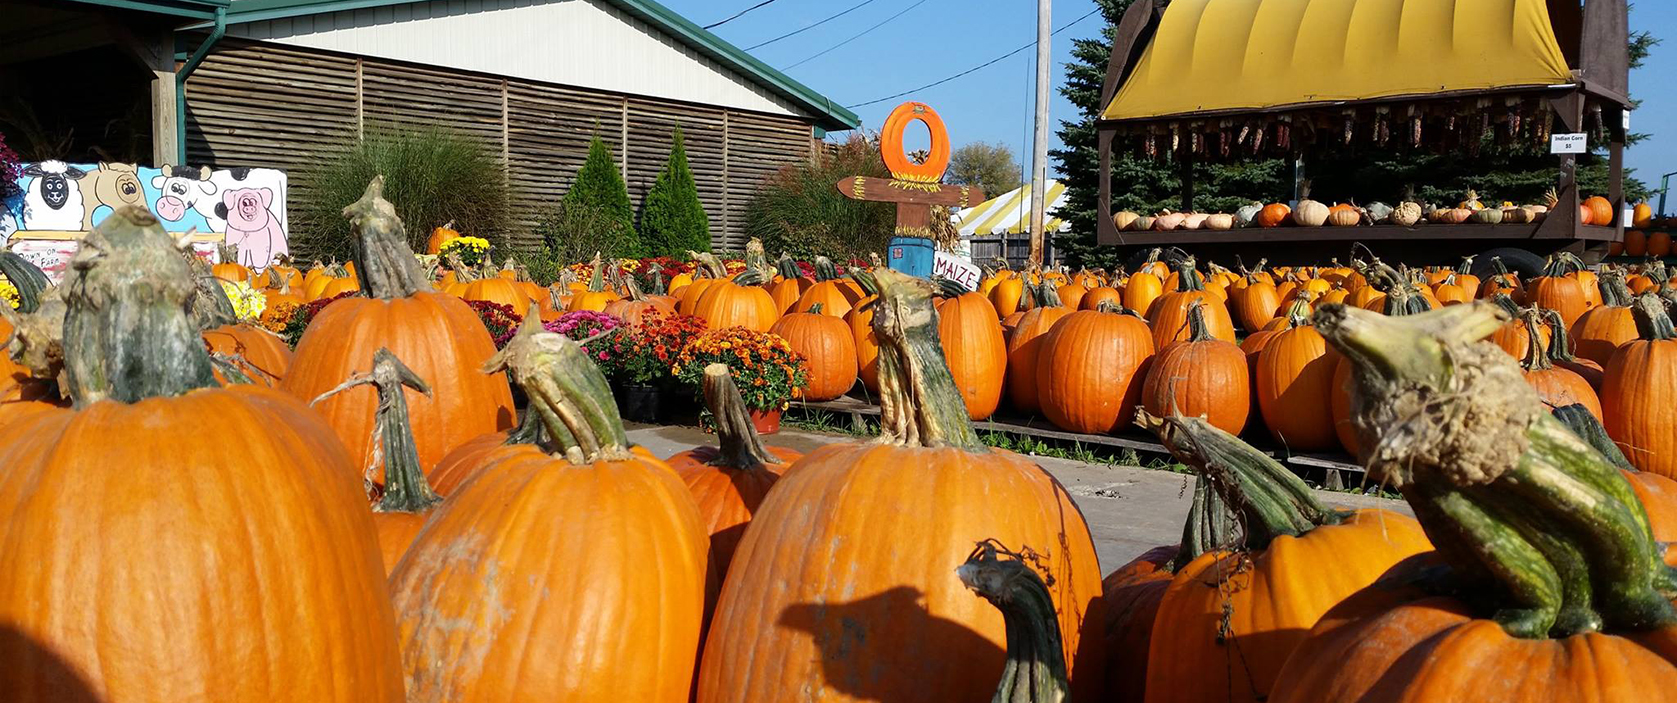 Fall in Hartville, Ohio Pumpkins, Corn Mazes, Fall Photos & More